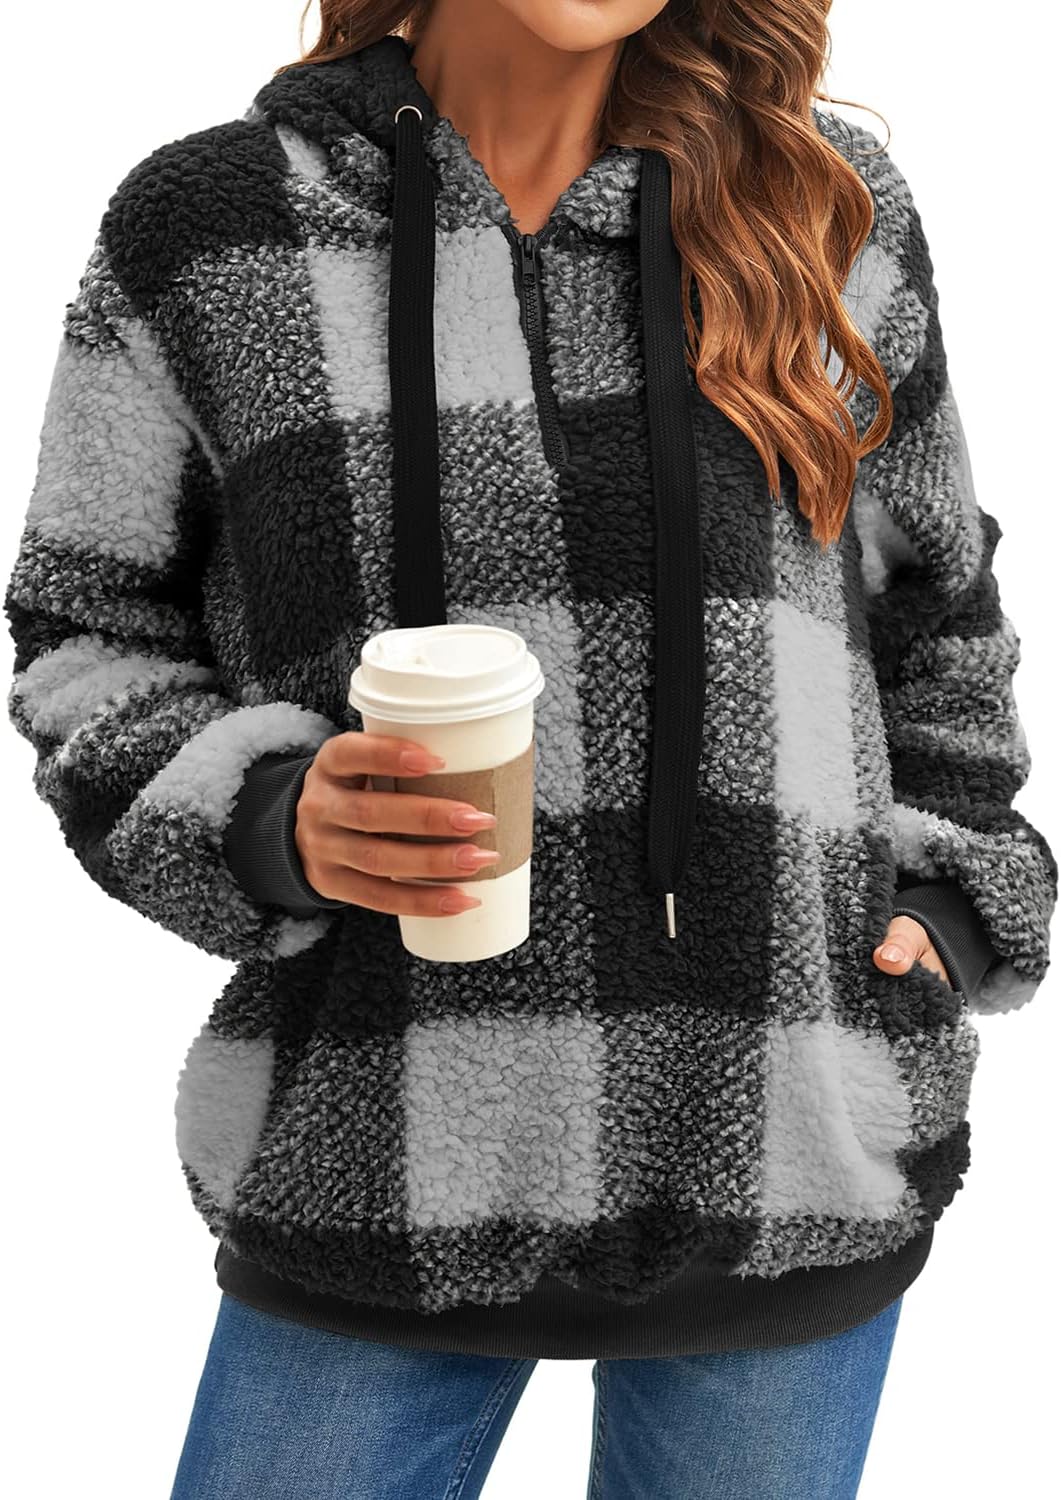 ReachMe Womens Oversized Sherpa Pullover Hoodie with Pockets Fuzzy Fleece Sweats